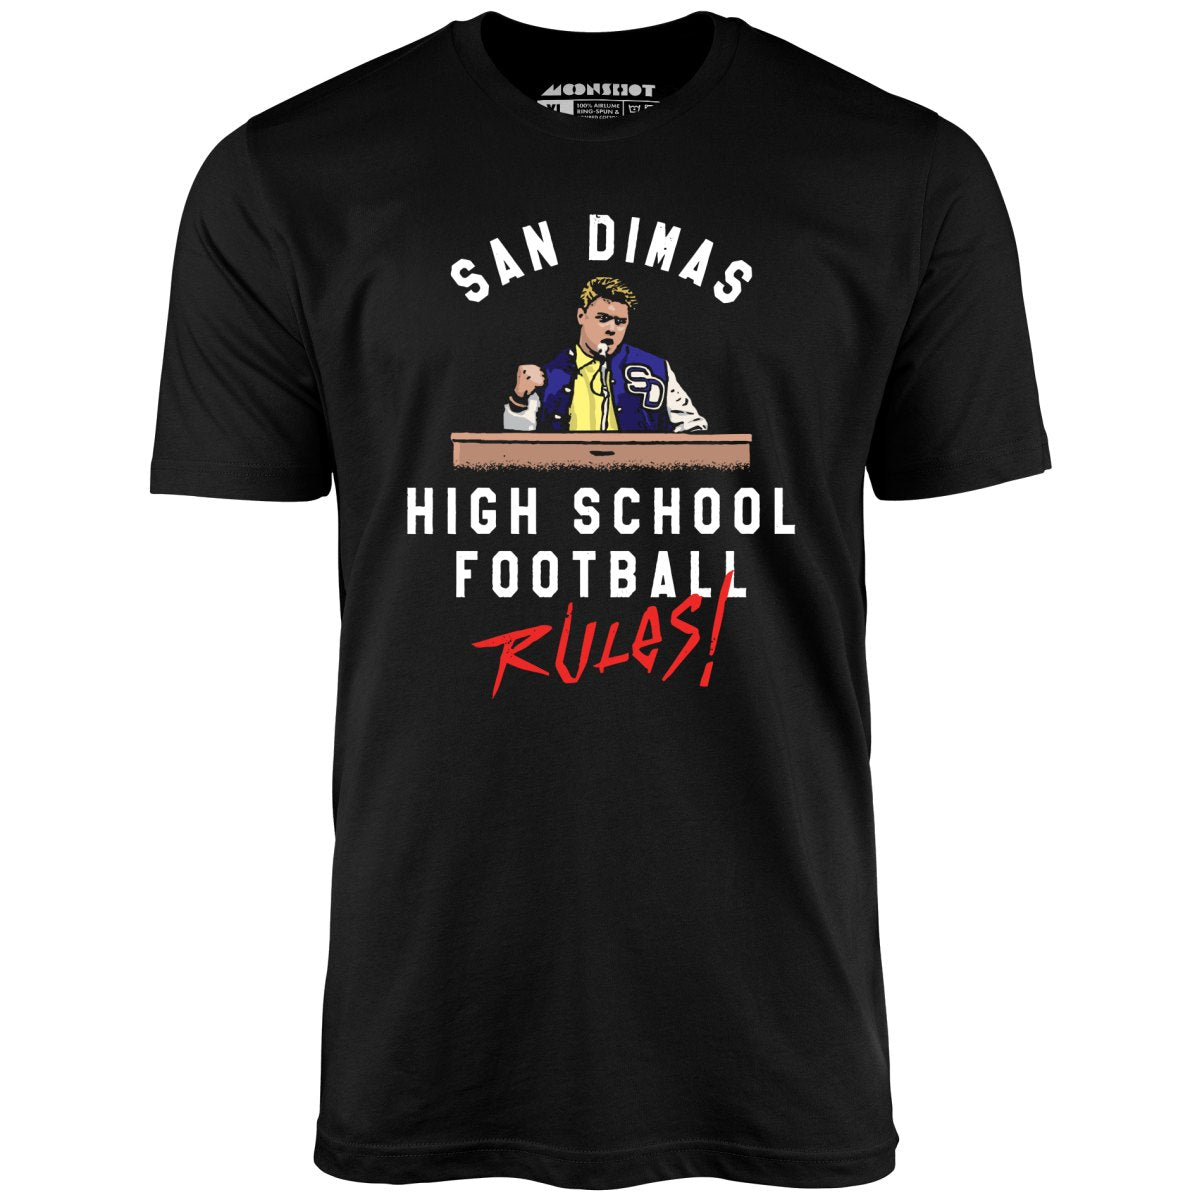 San Dimas High School Football Rules - Unisex T-Shirt